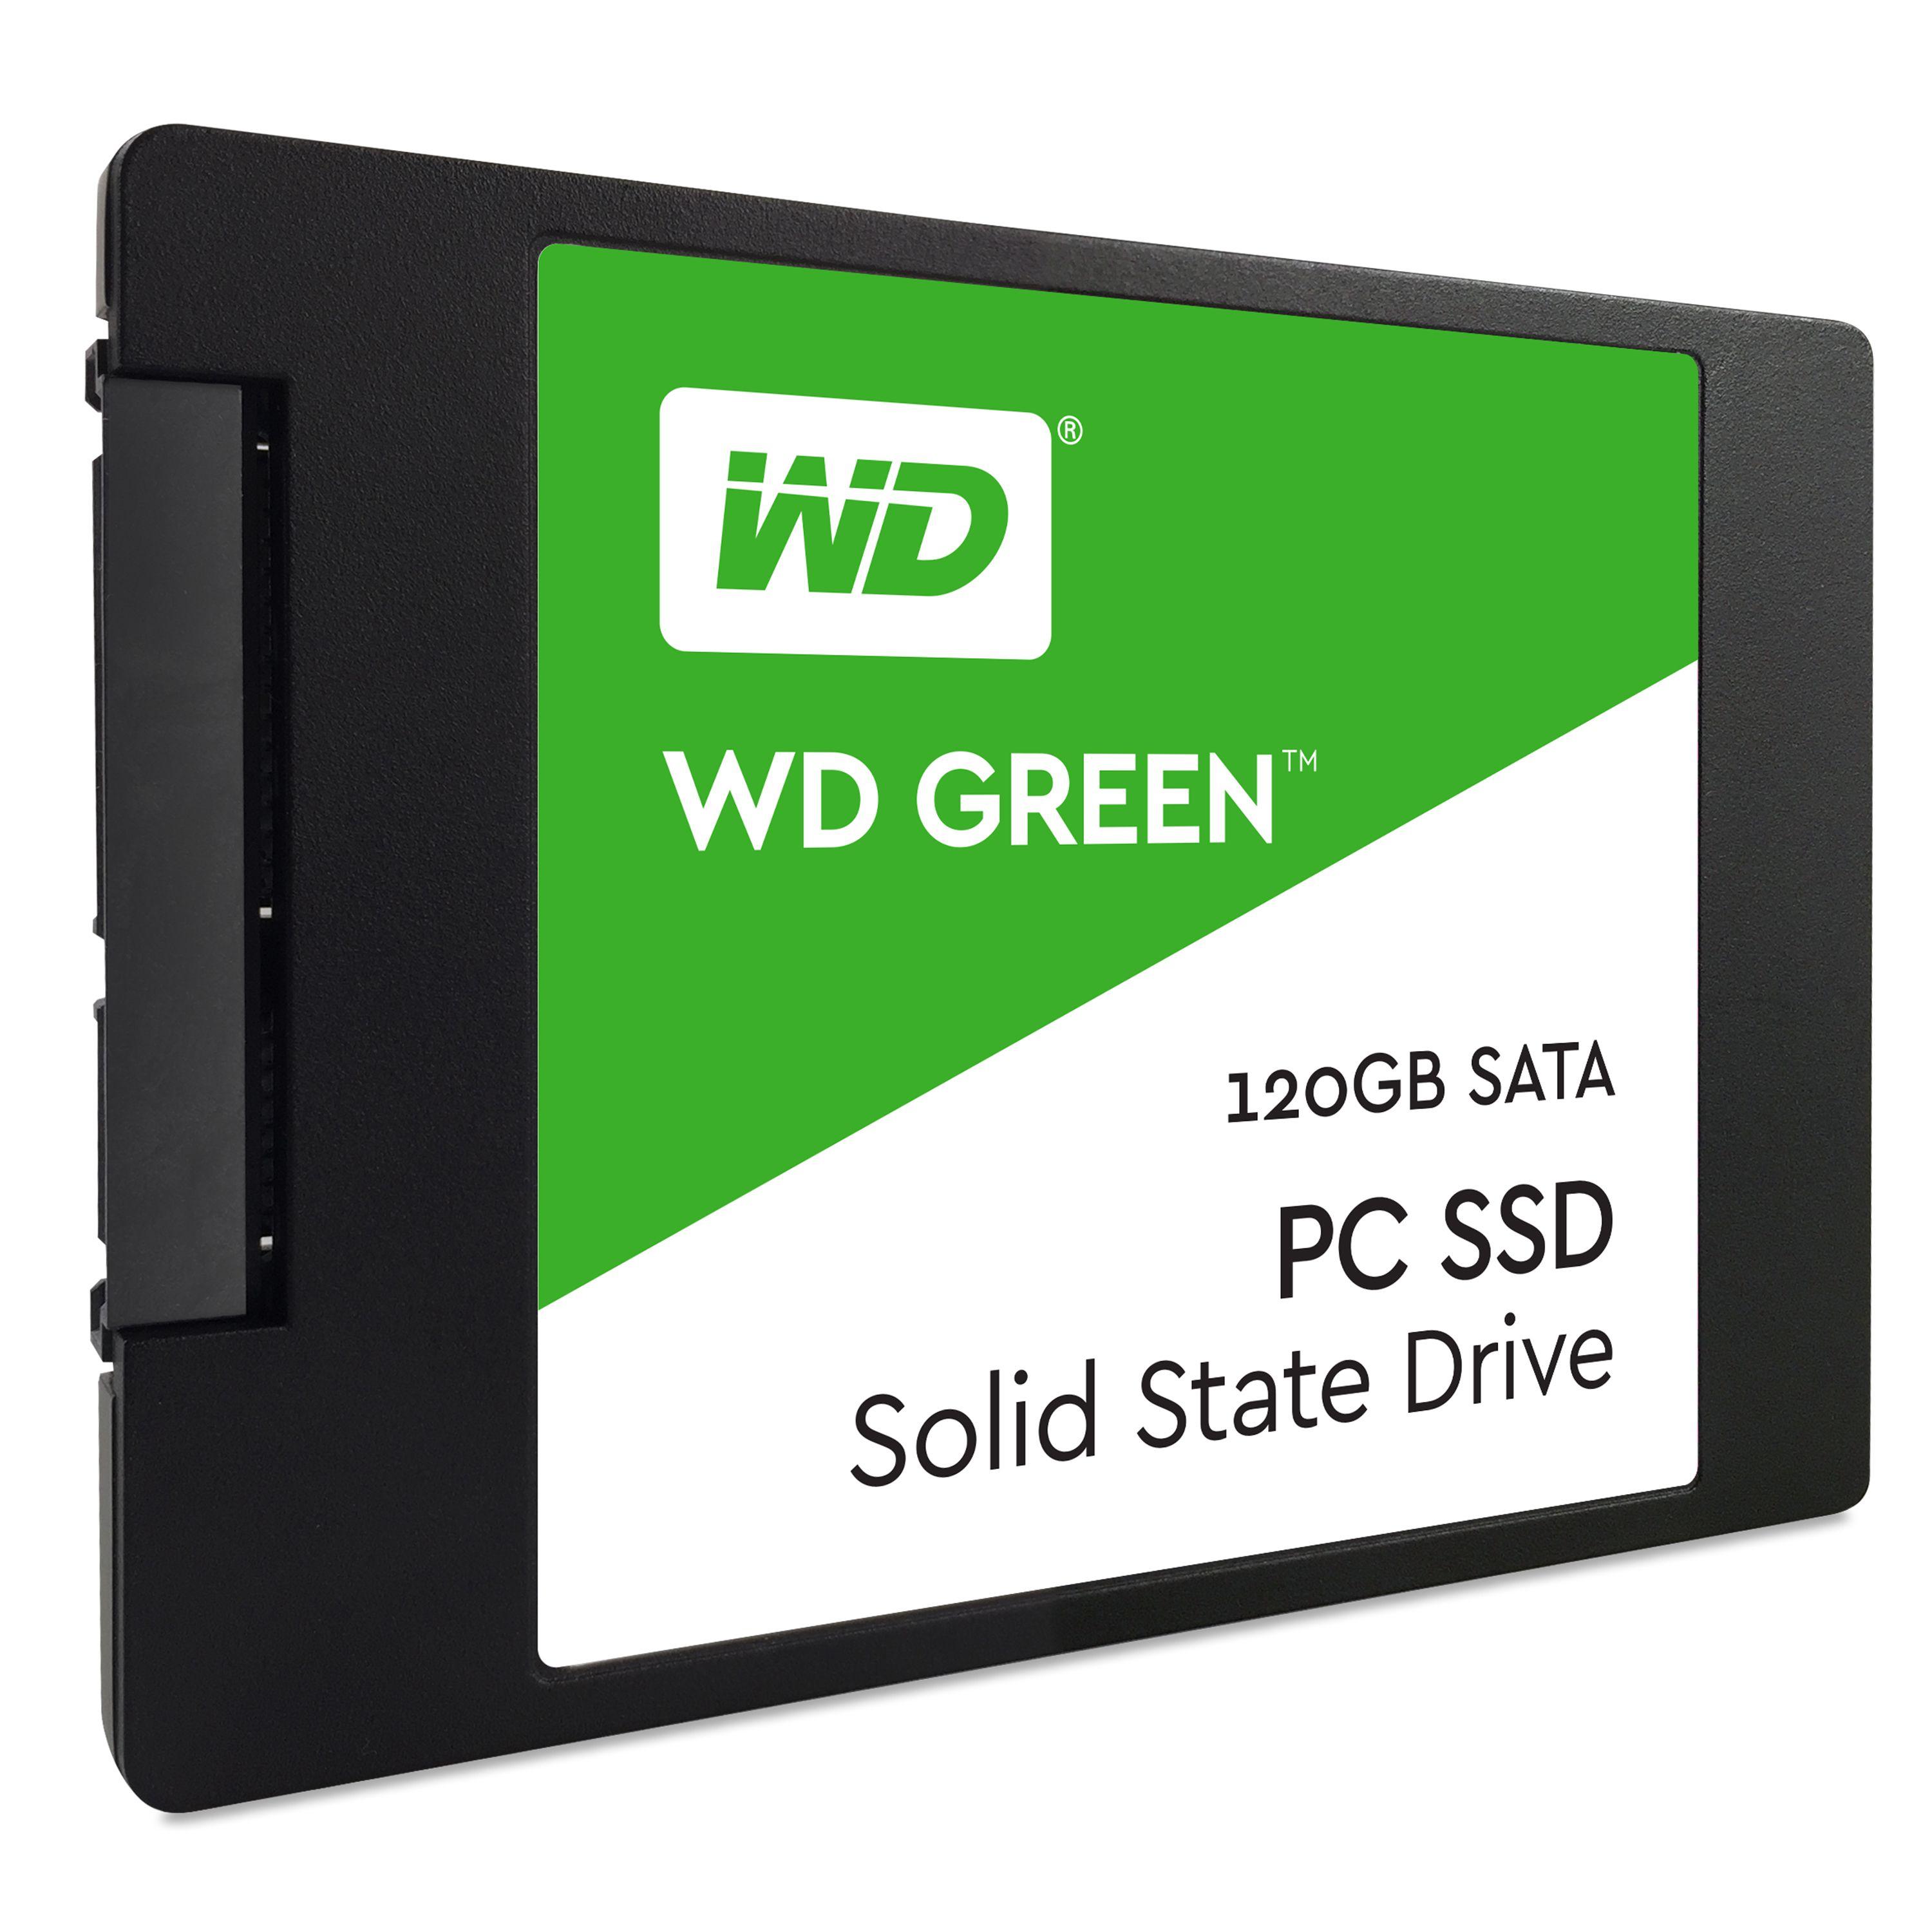 Digital Green Logo - Buy Western Digital Green PC SSD 120GB Serial ATA III